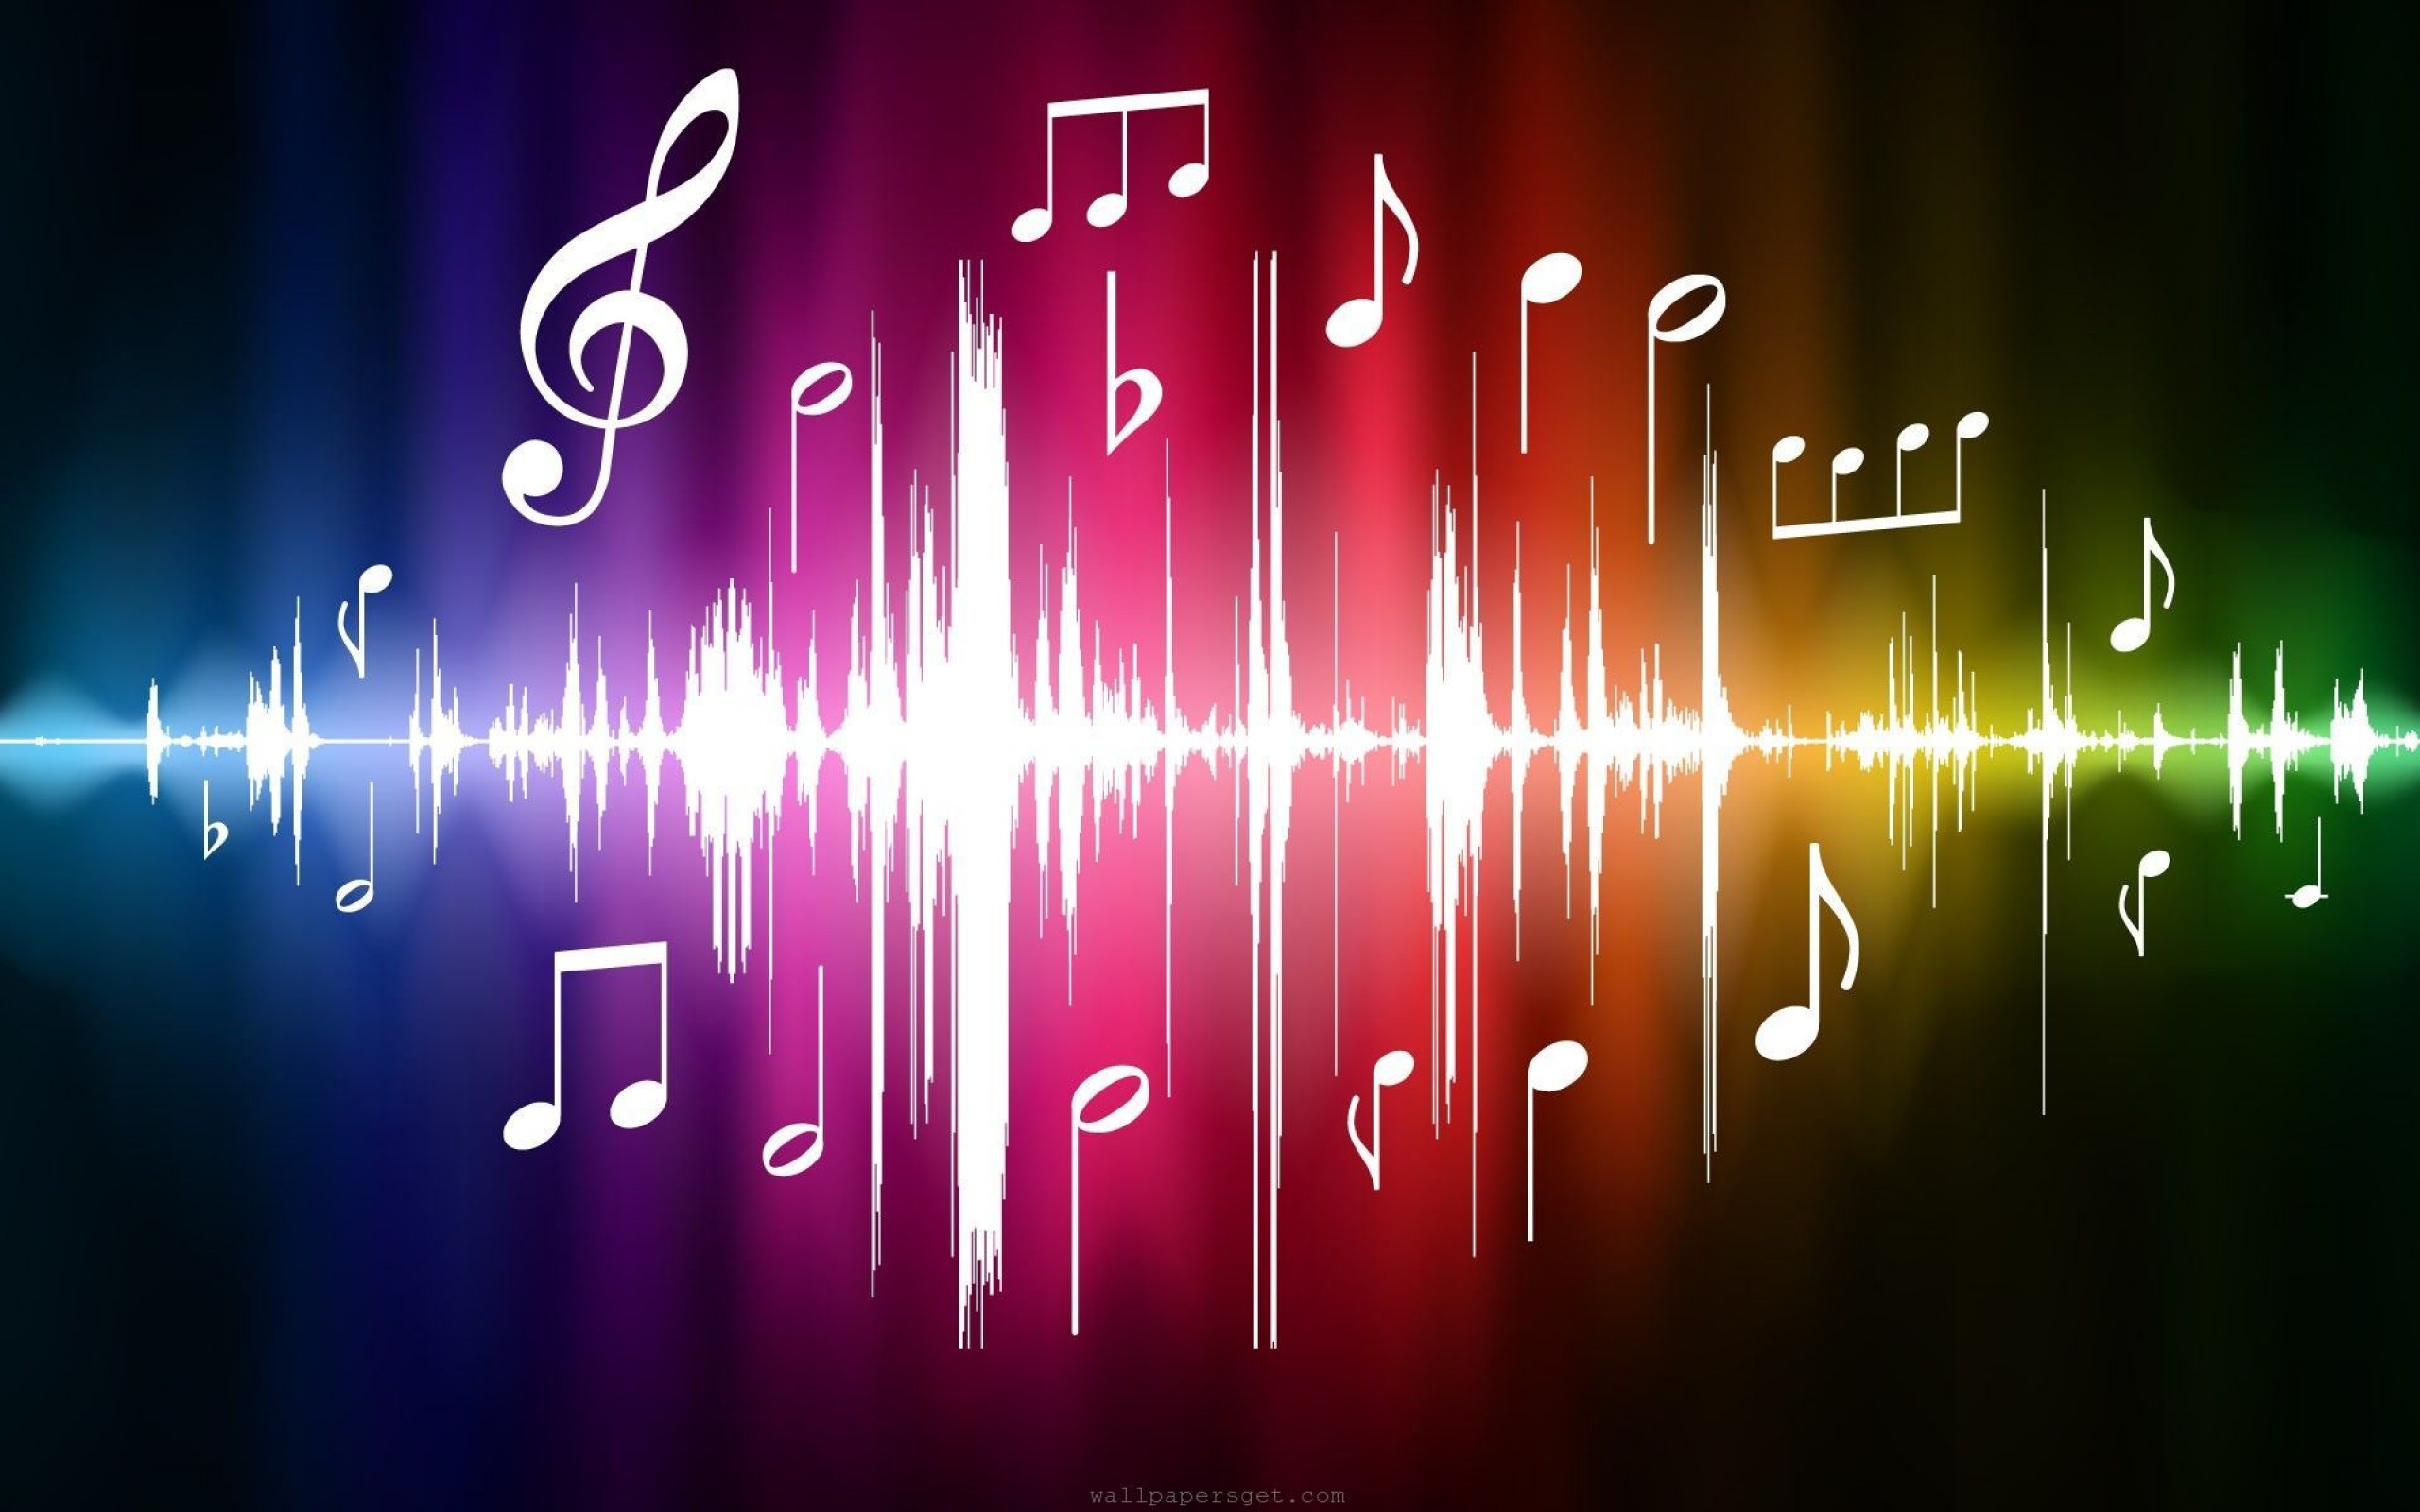  in hd wallpapers sound waves musical note desktop 25601600 wallpaper